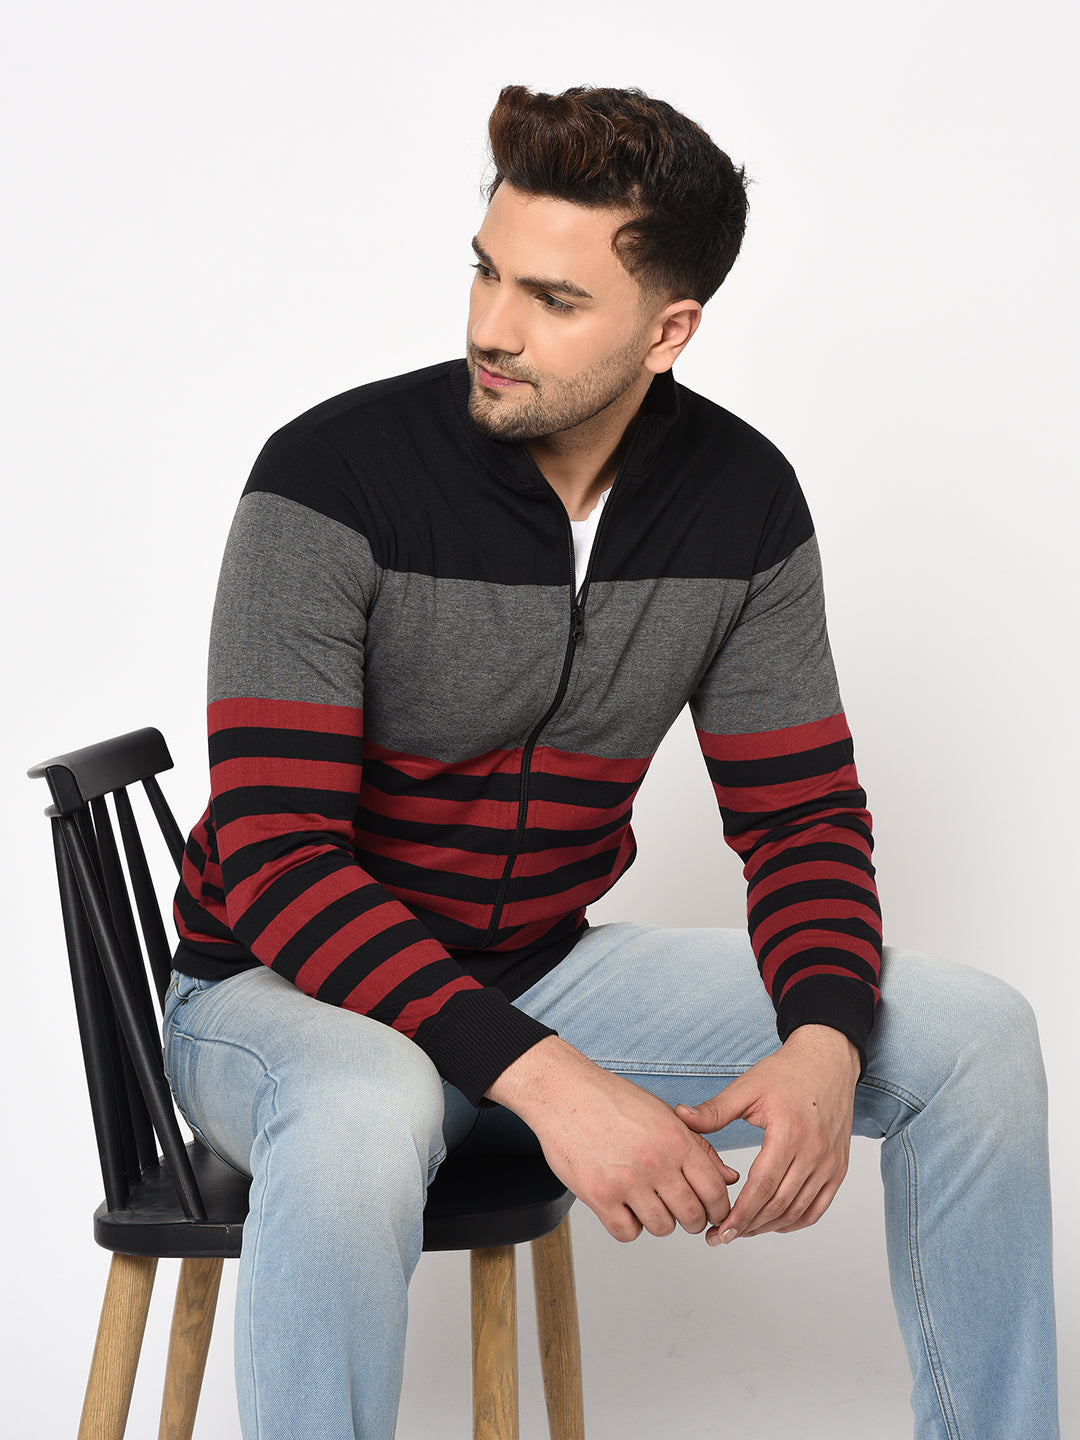 Austin wood Mens Multi Long Sleeves High Neck Striped Sweatshirt